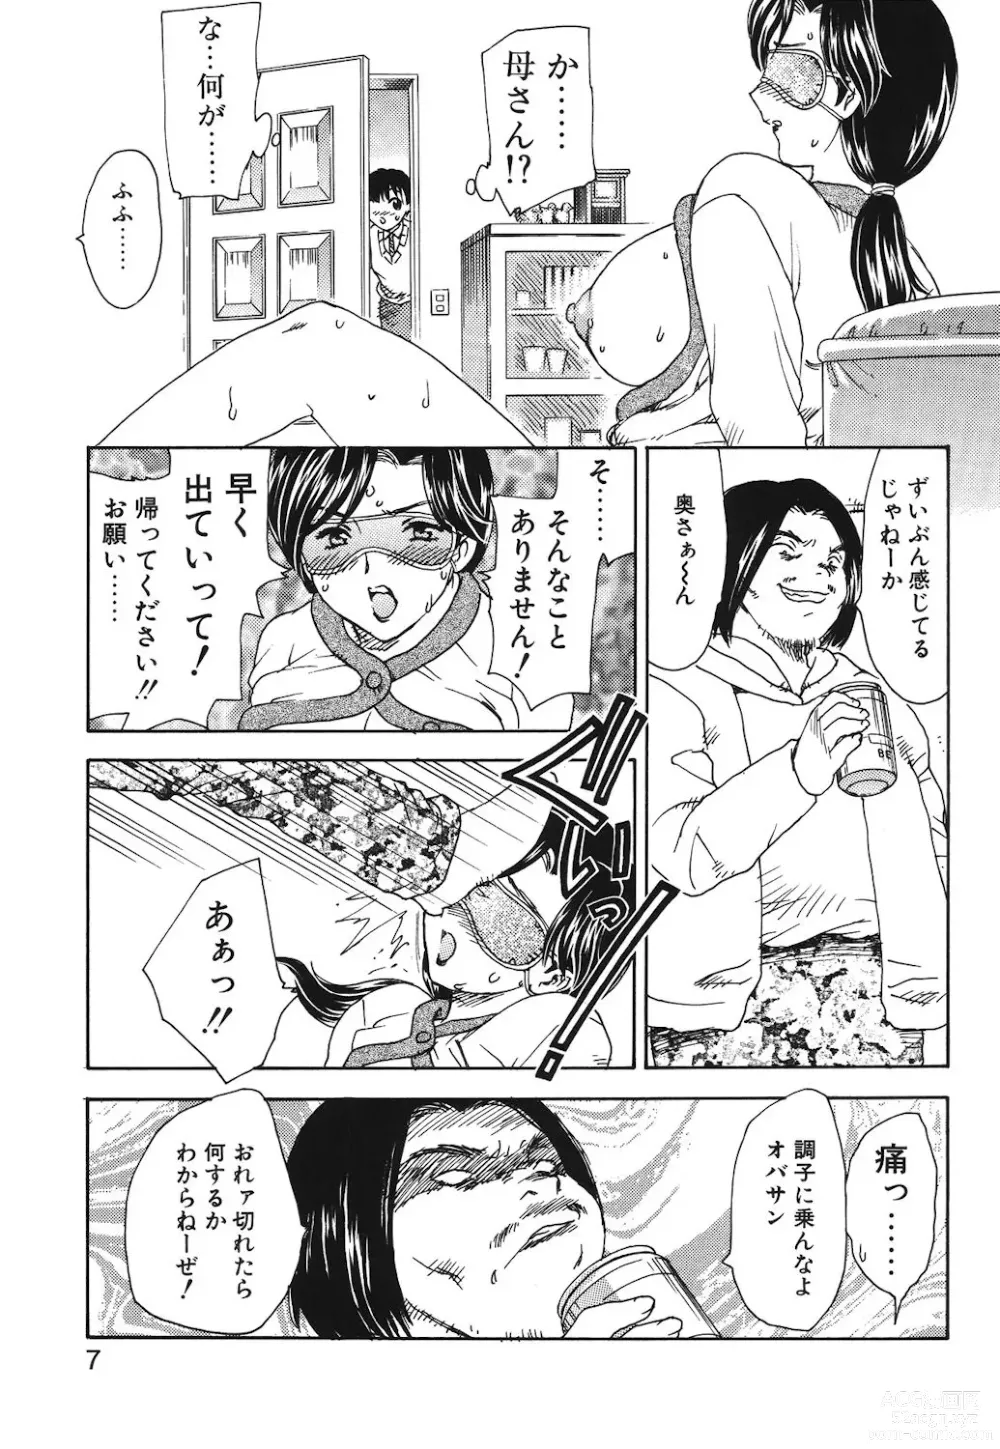 Page 4 of manga HA-HA